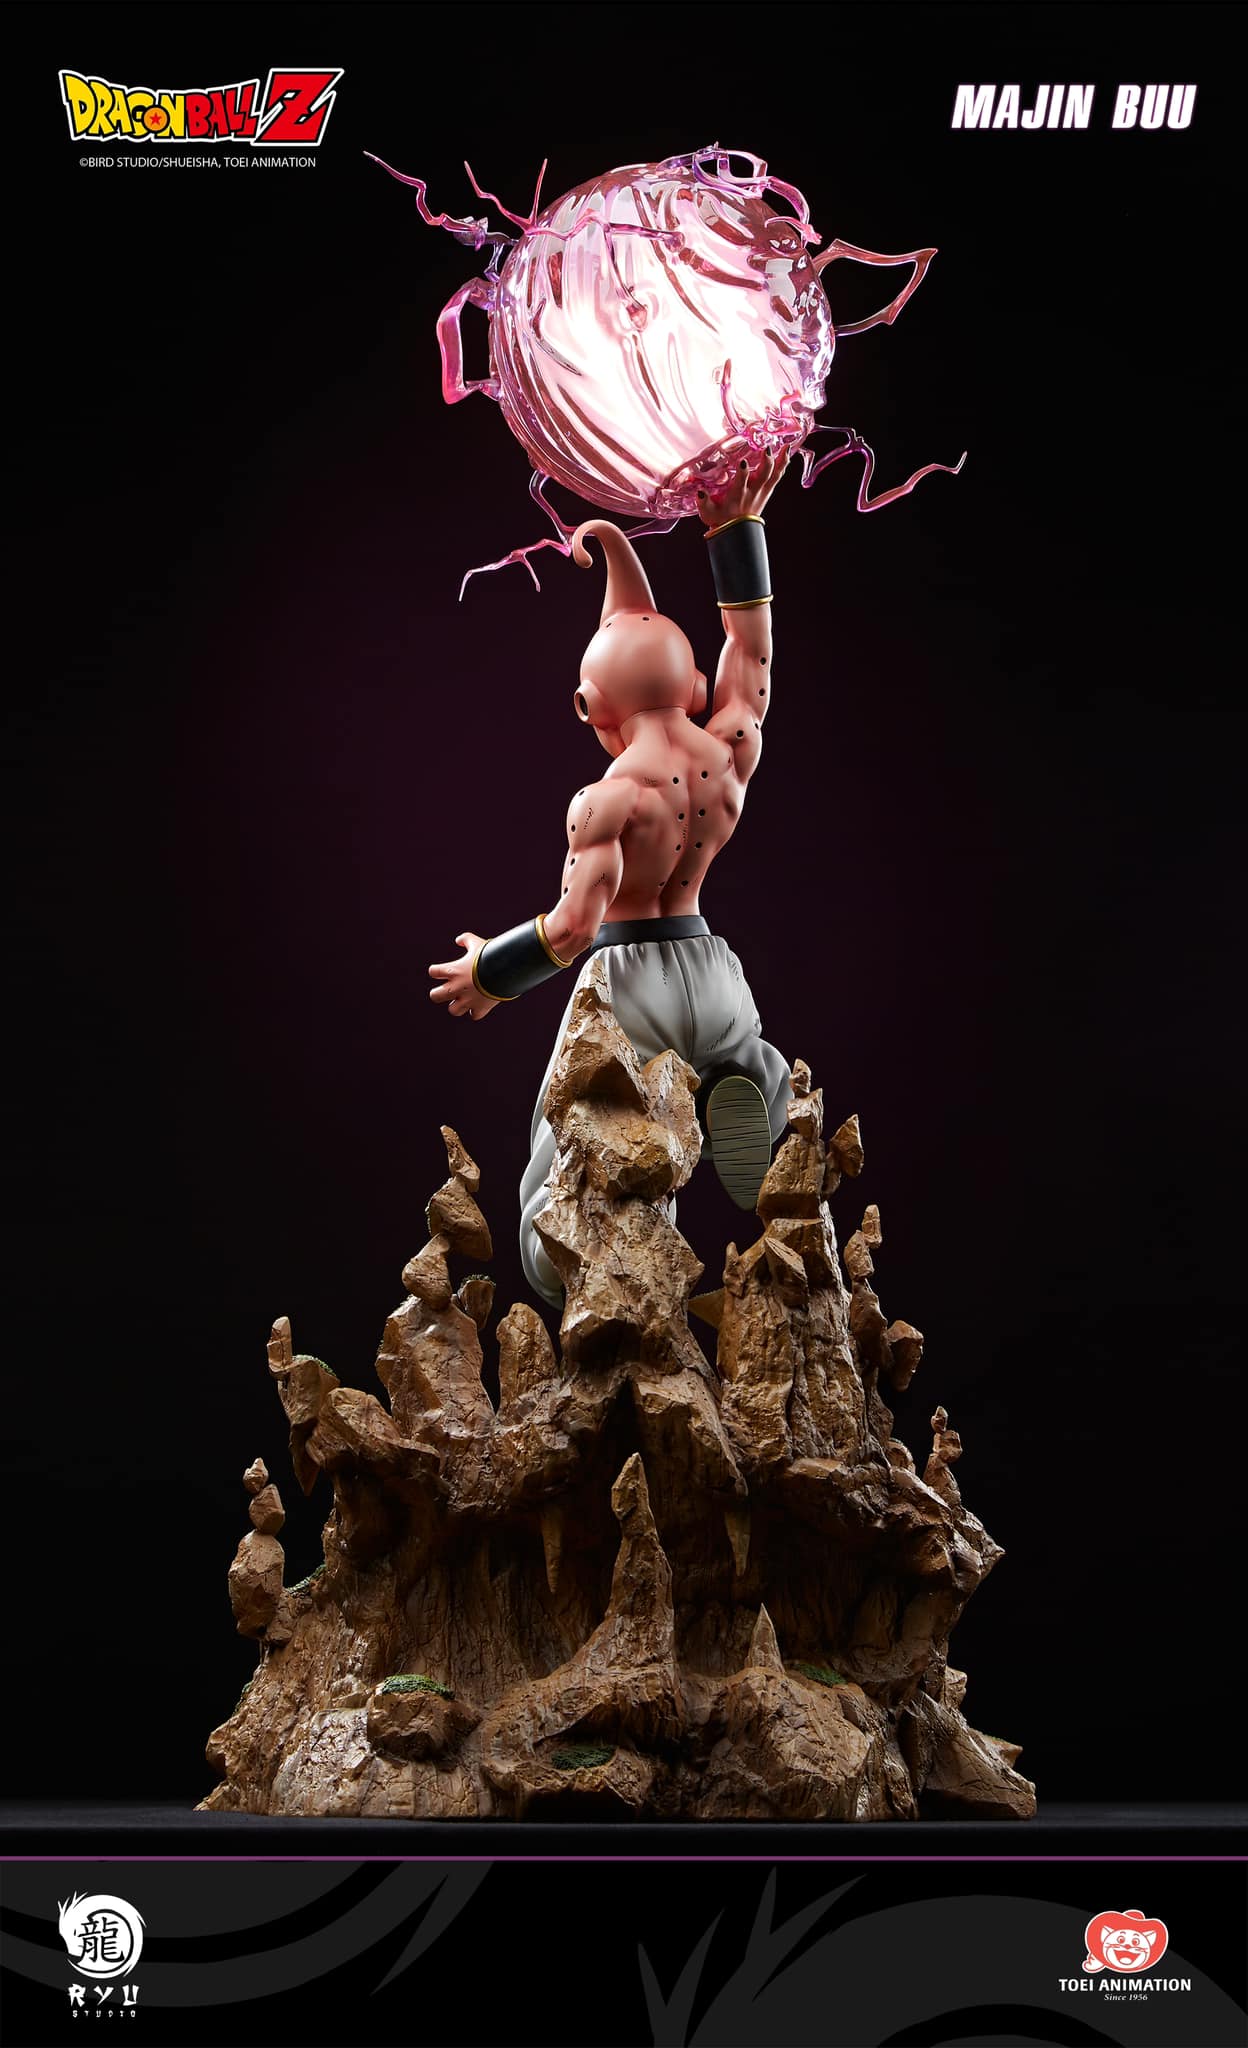 In Stock] Break Studio 1/4 Dragon Ball Majin Buu Figure Statue